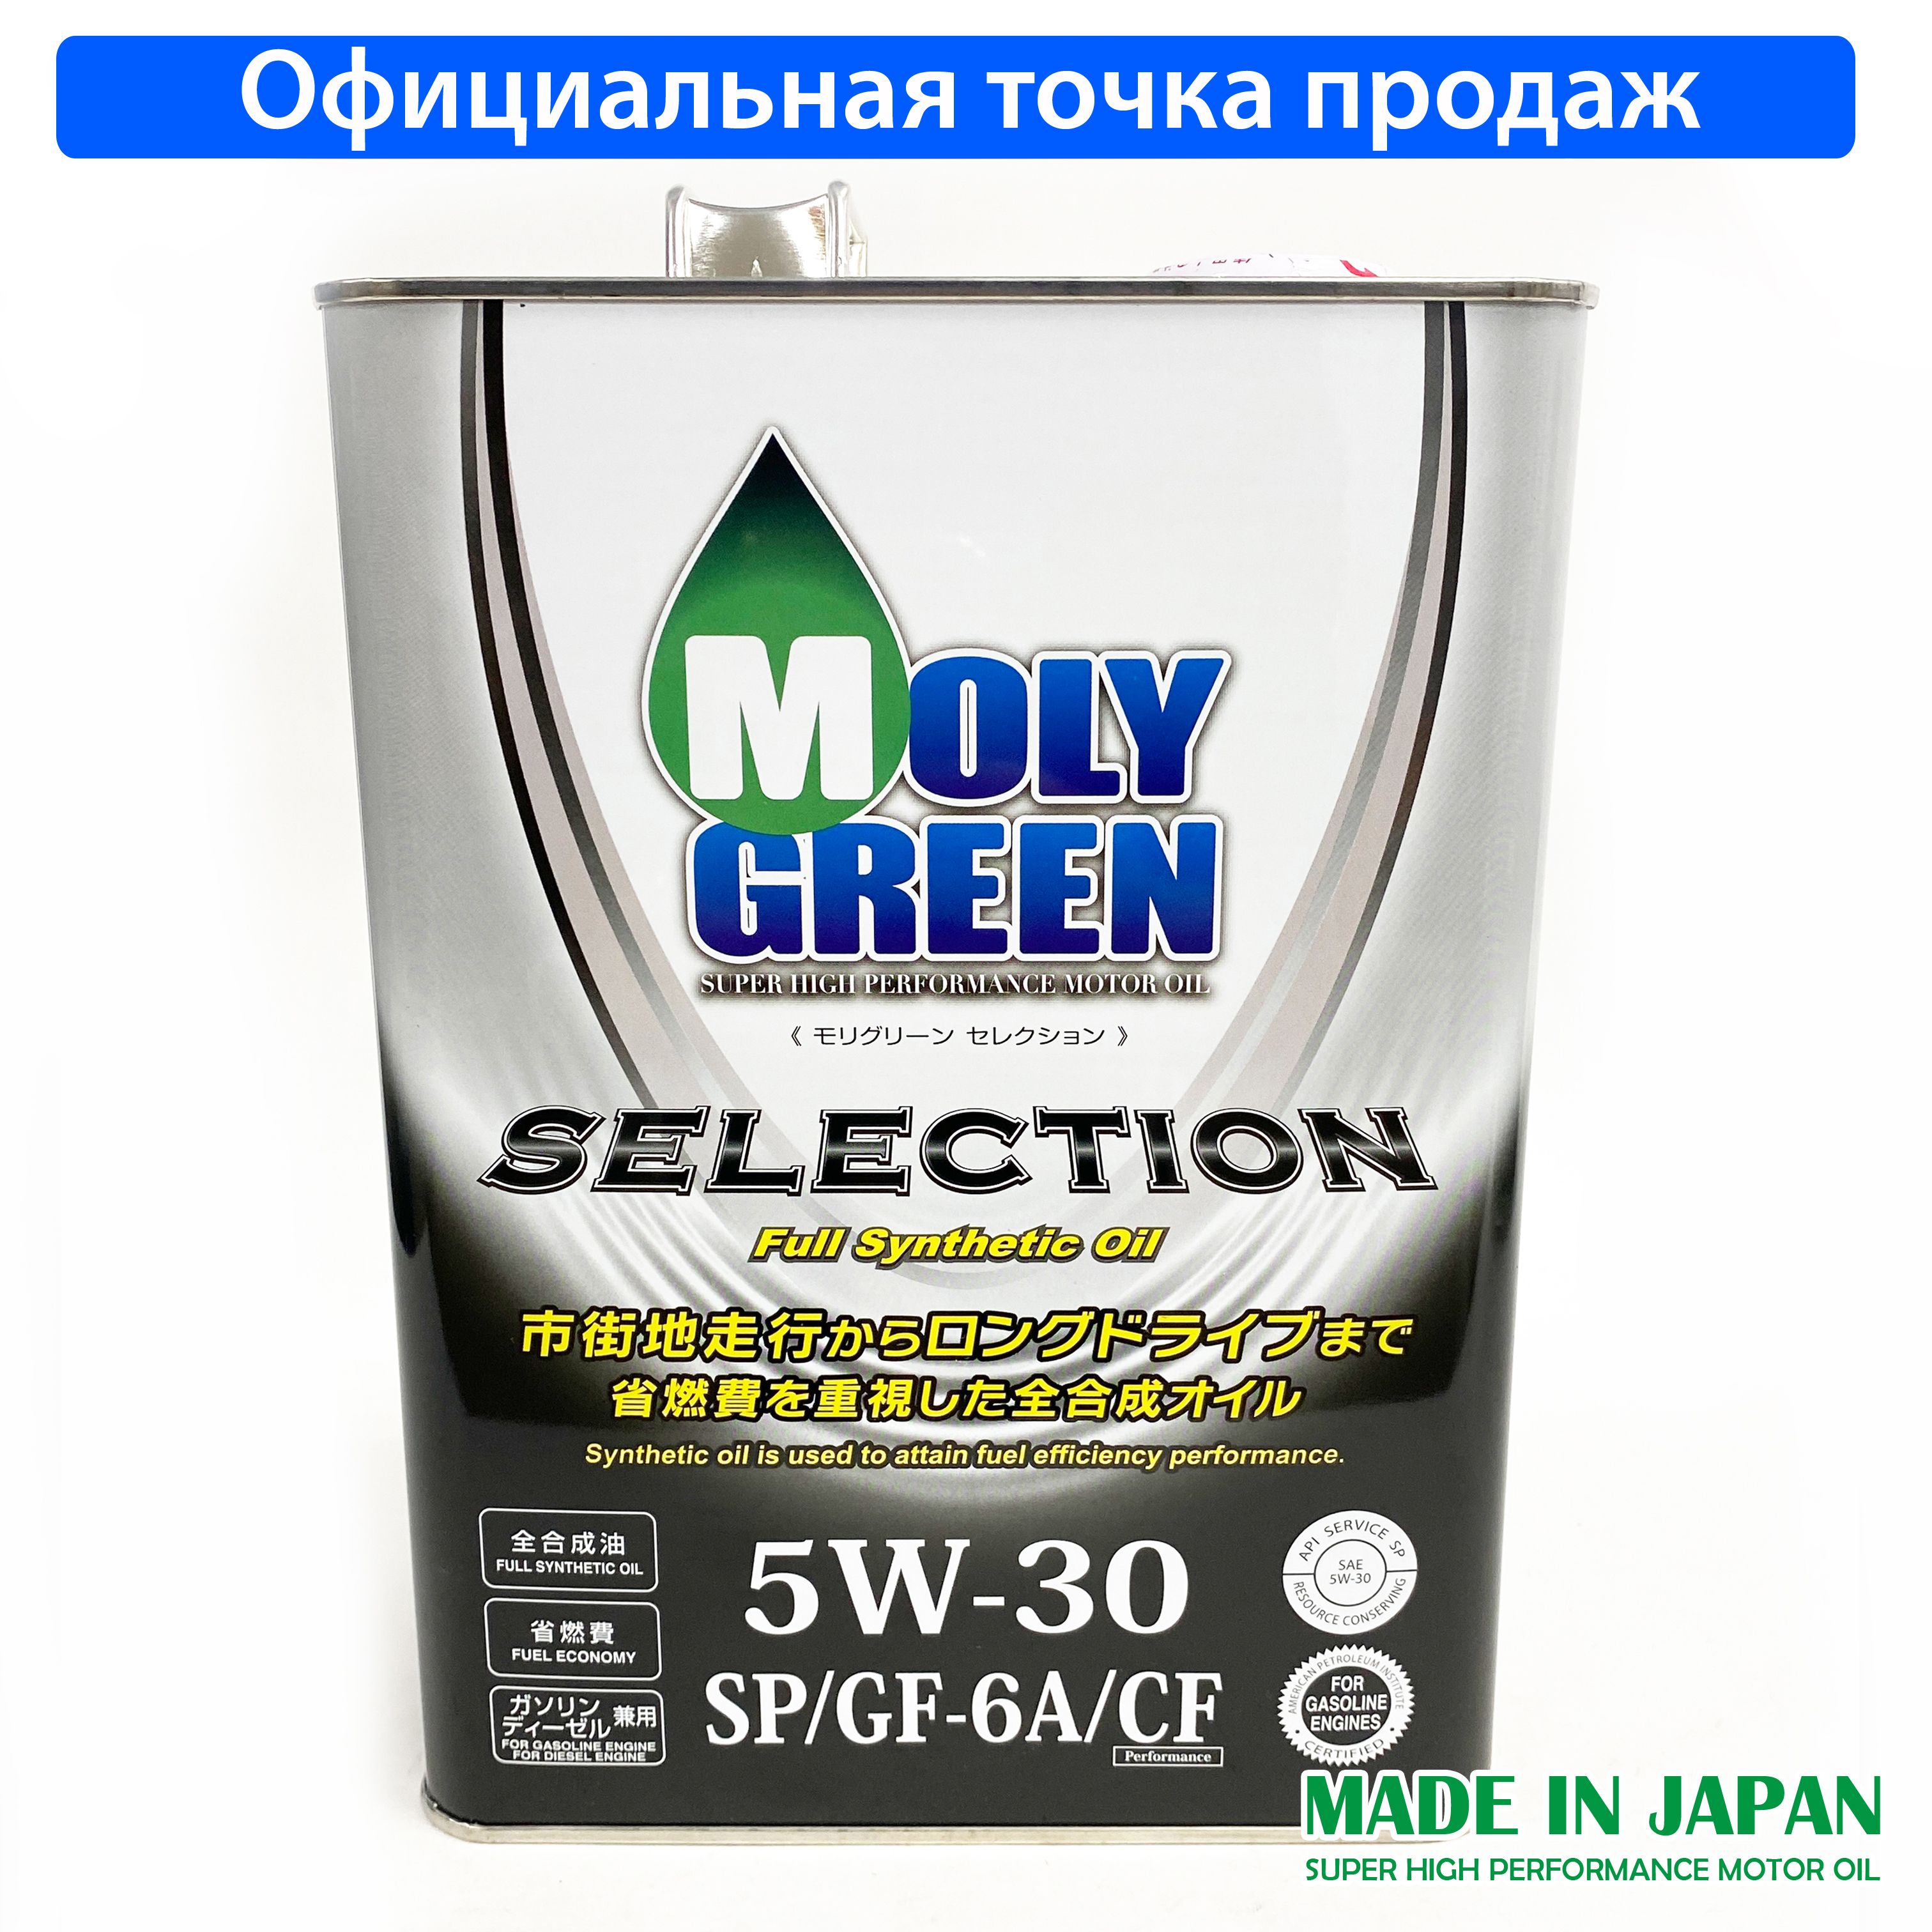 Масло eagle 5w30. MOLYGREEN масло моторное selection 5w-30 синтетическое. Moly Green selection 5w30 бочка 200. Производство MOLYGREEN. Масло моли Грин 5w30 отзывы.